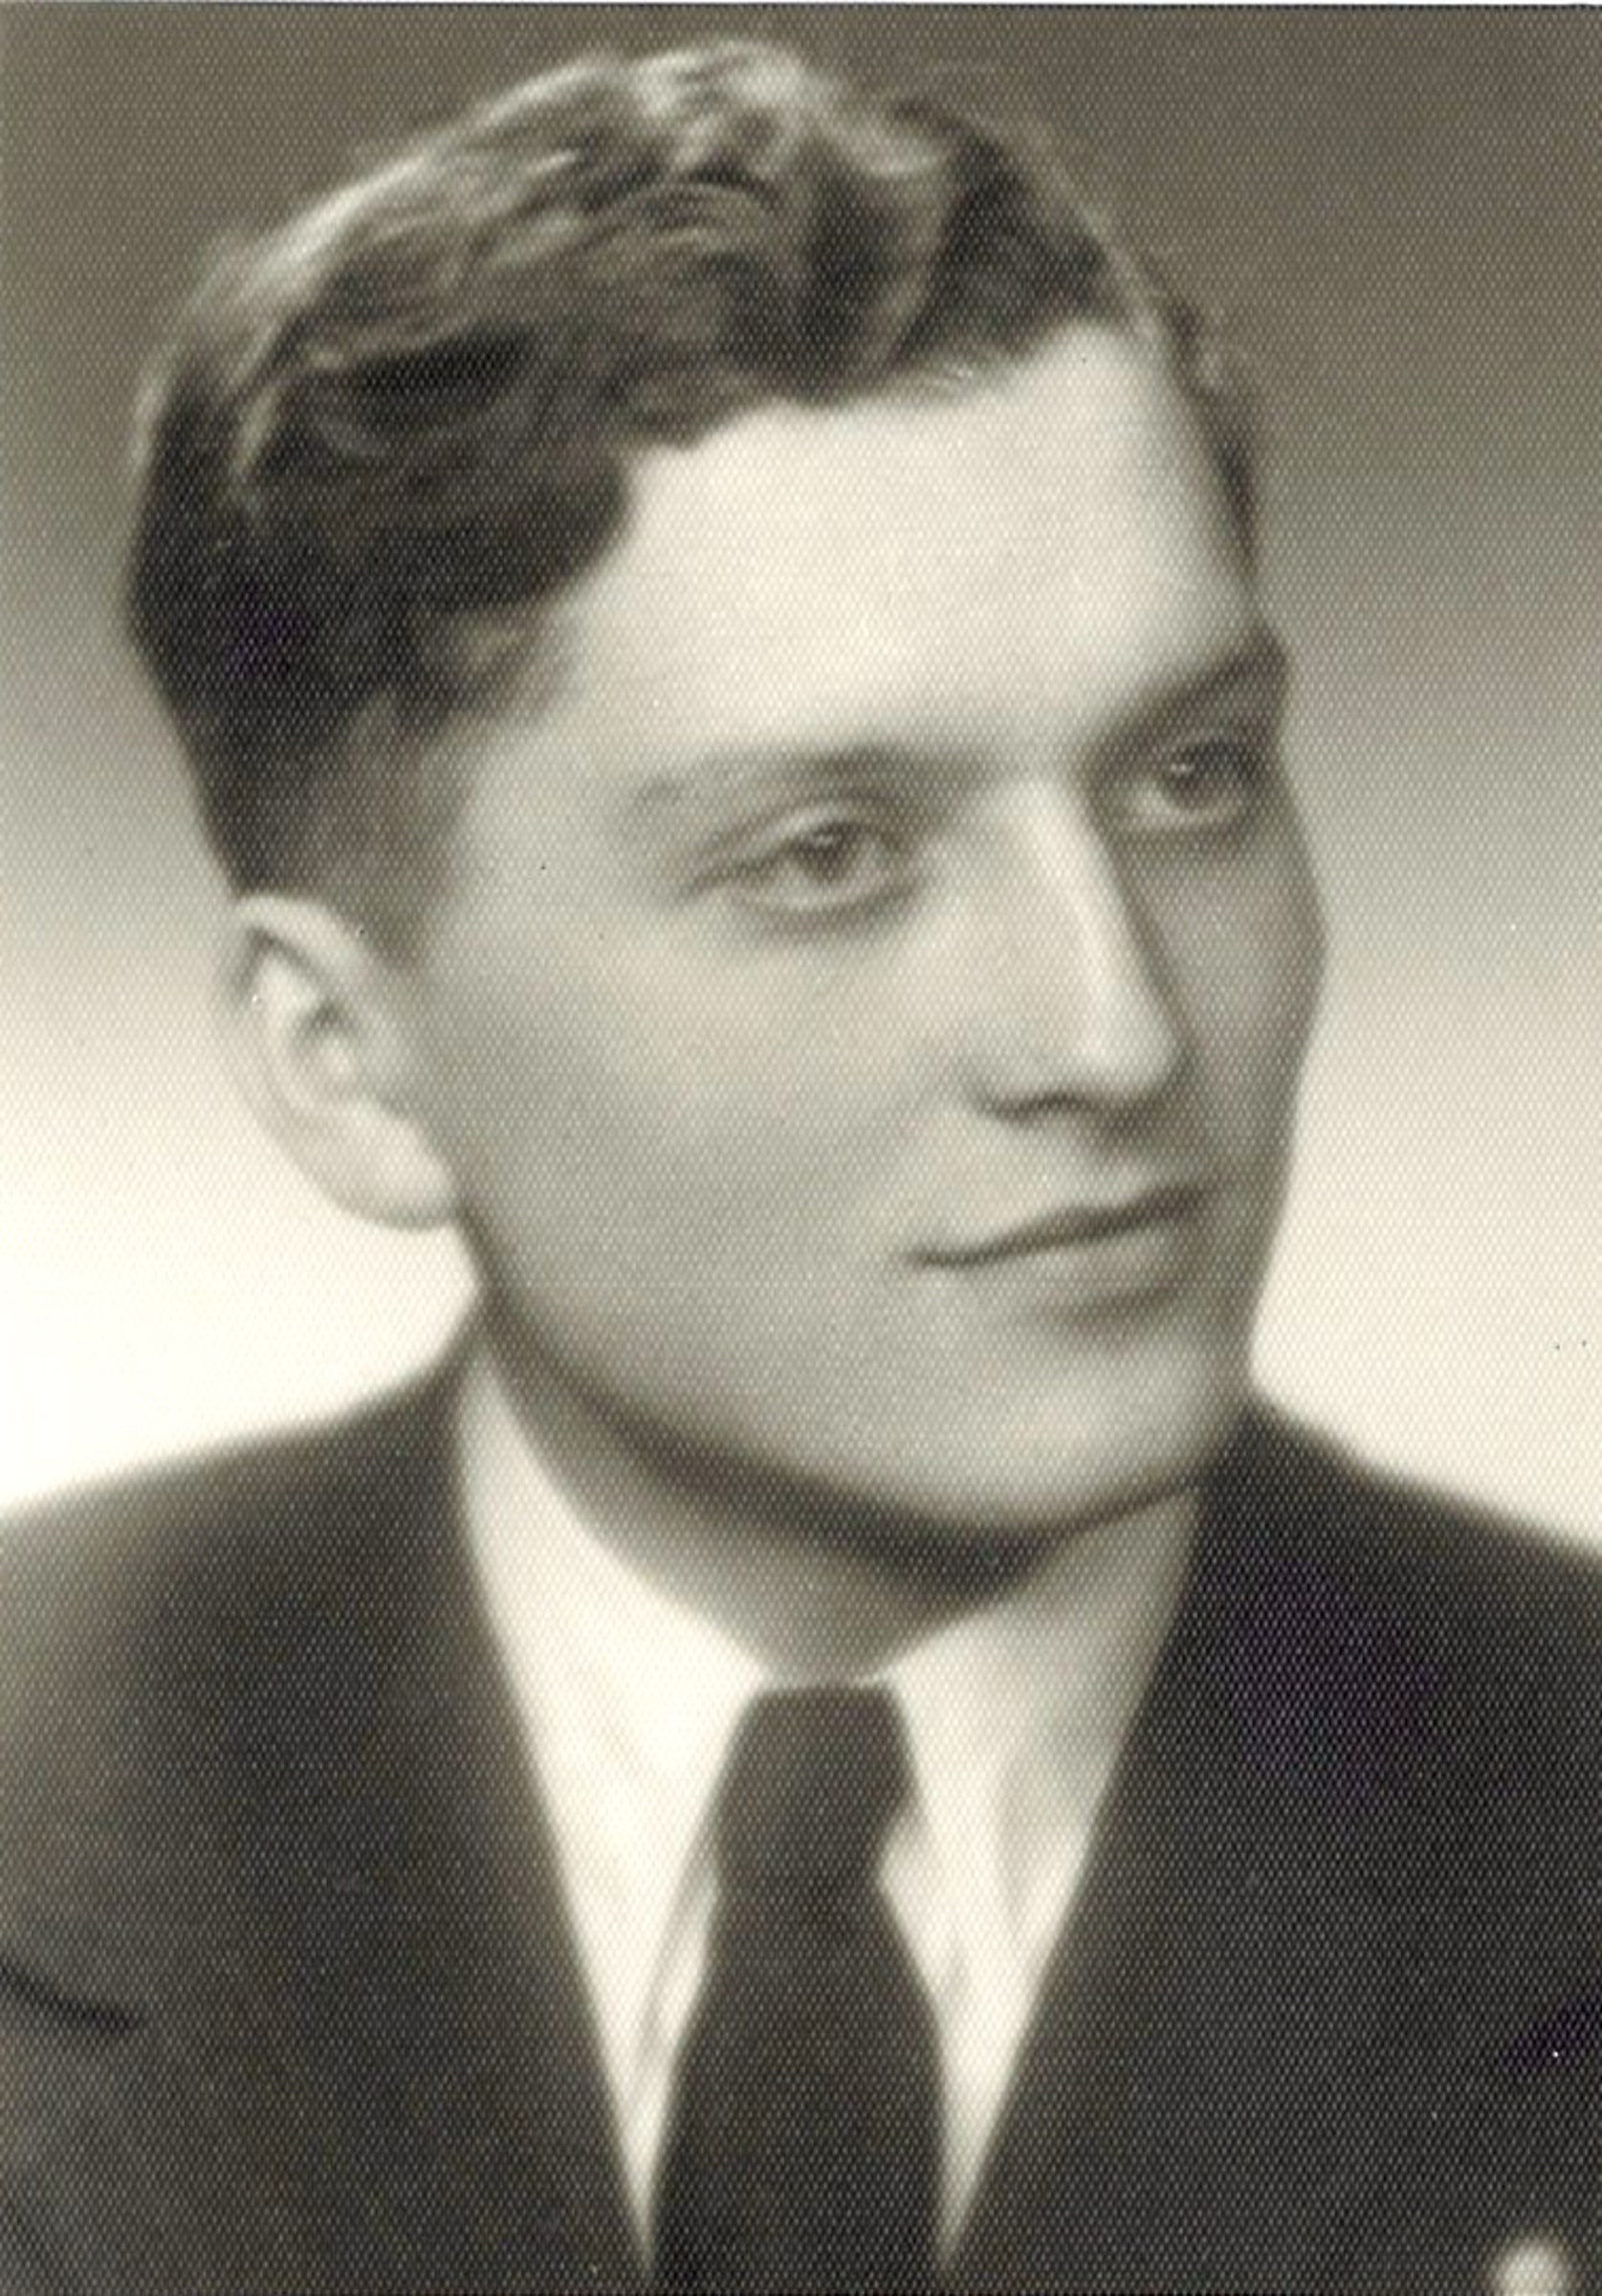 1942 - graduation photo